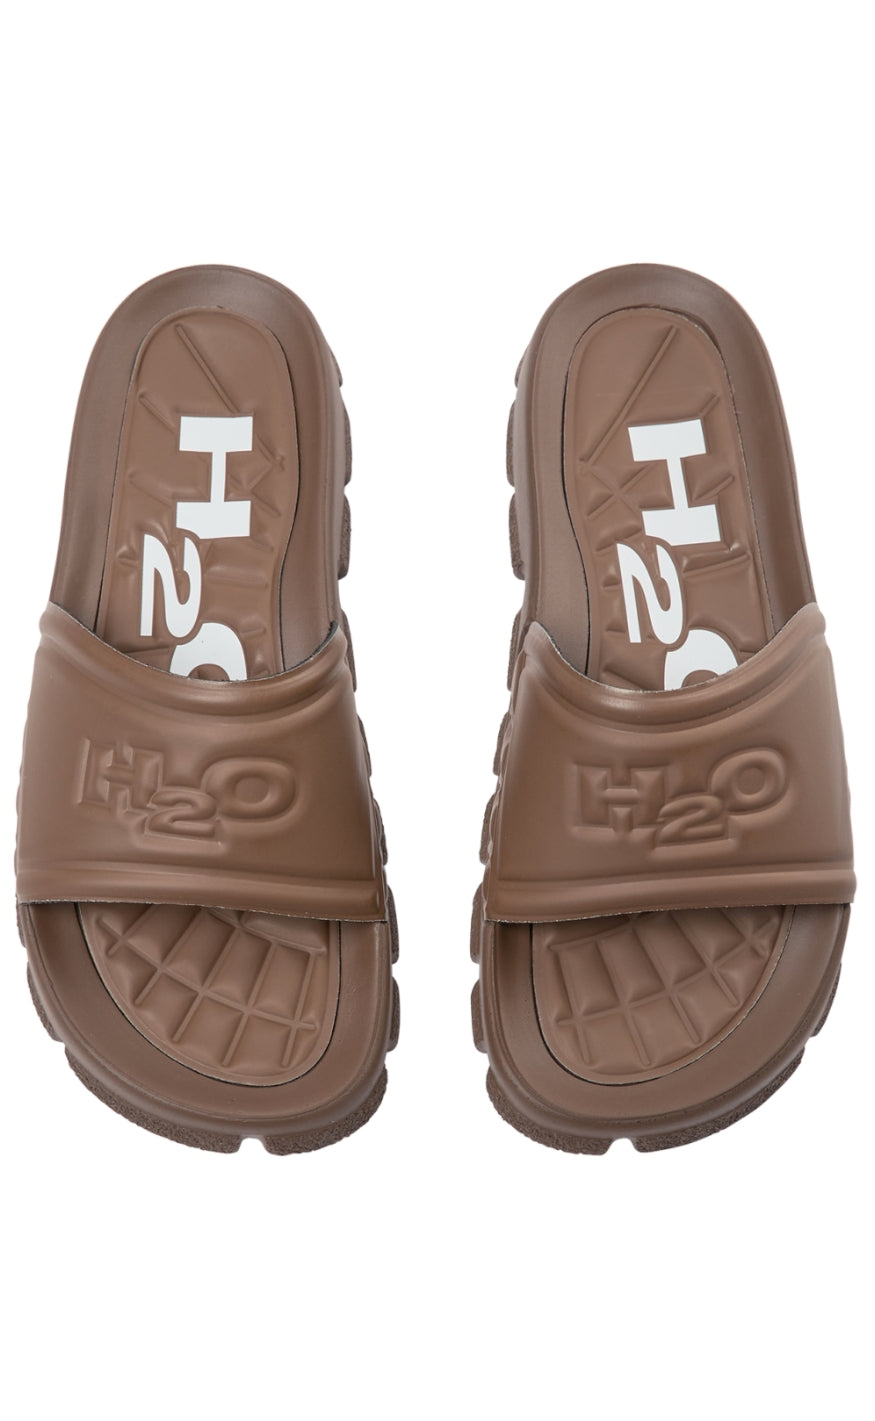 H2O Sandal - Trek - Chocolate Brown